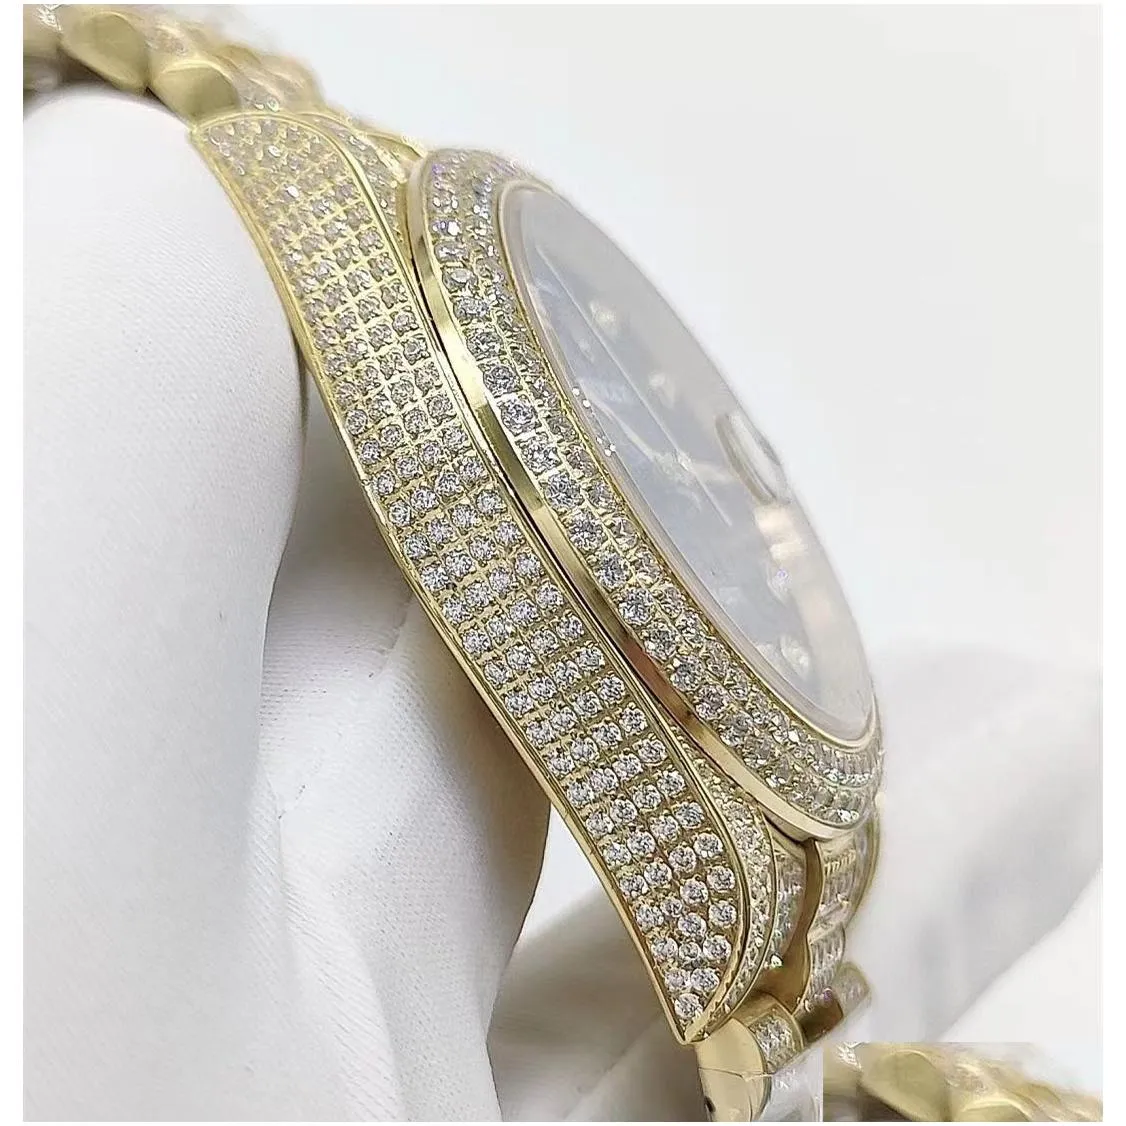 Luxury Designer Classic FashionSet with diamond Automatic Watch Size 41mm digital scale Sapphire glass waterproof feature Christmas